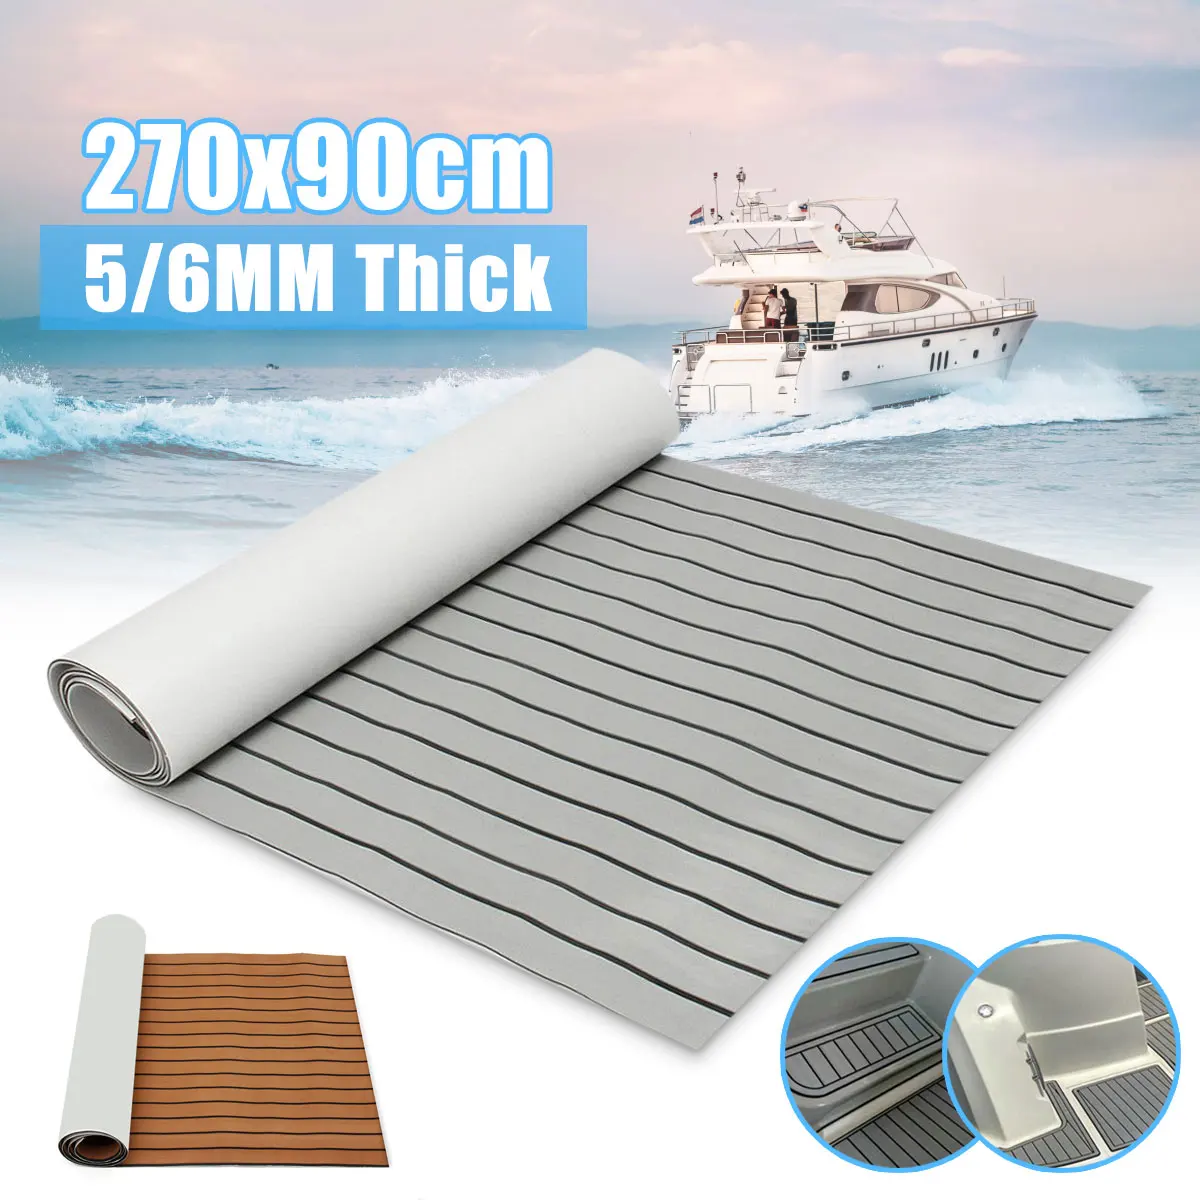 2700x900x6mm EVA Foam Marine Boat Flooring Faux Teak Decking Sheet Self-adhesive Boat Deck Mat Yacht Floor Accessories